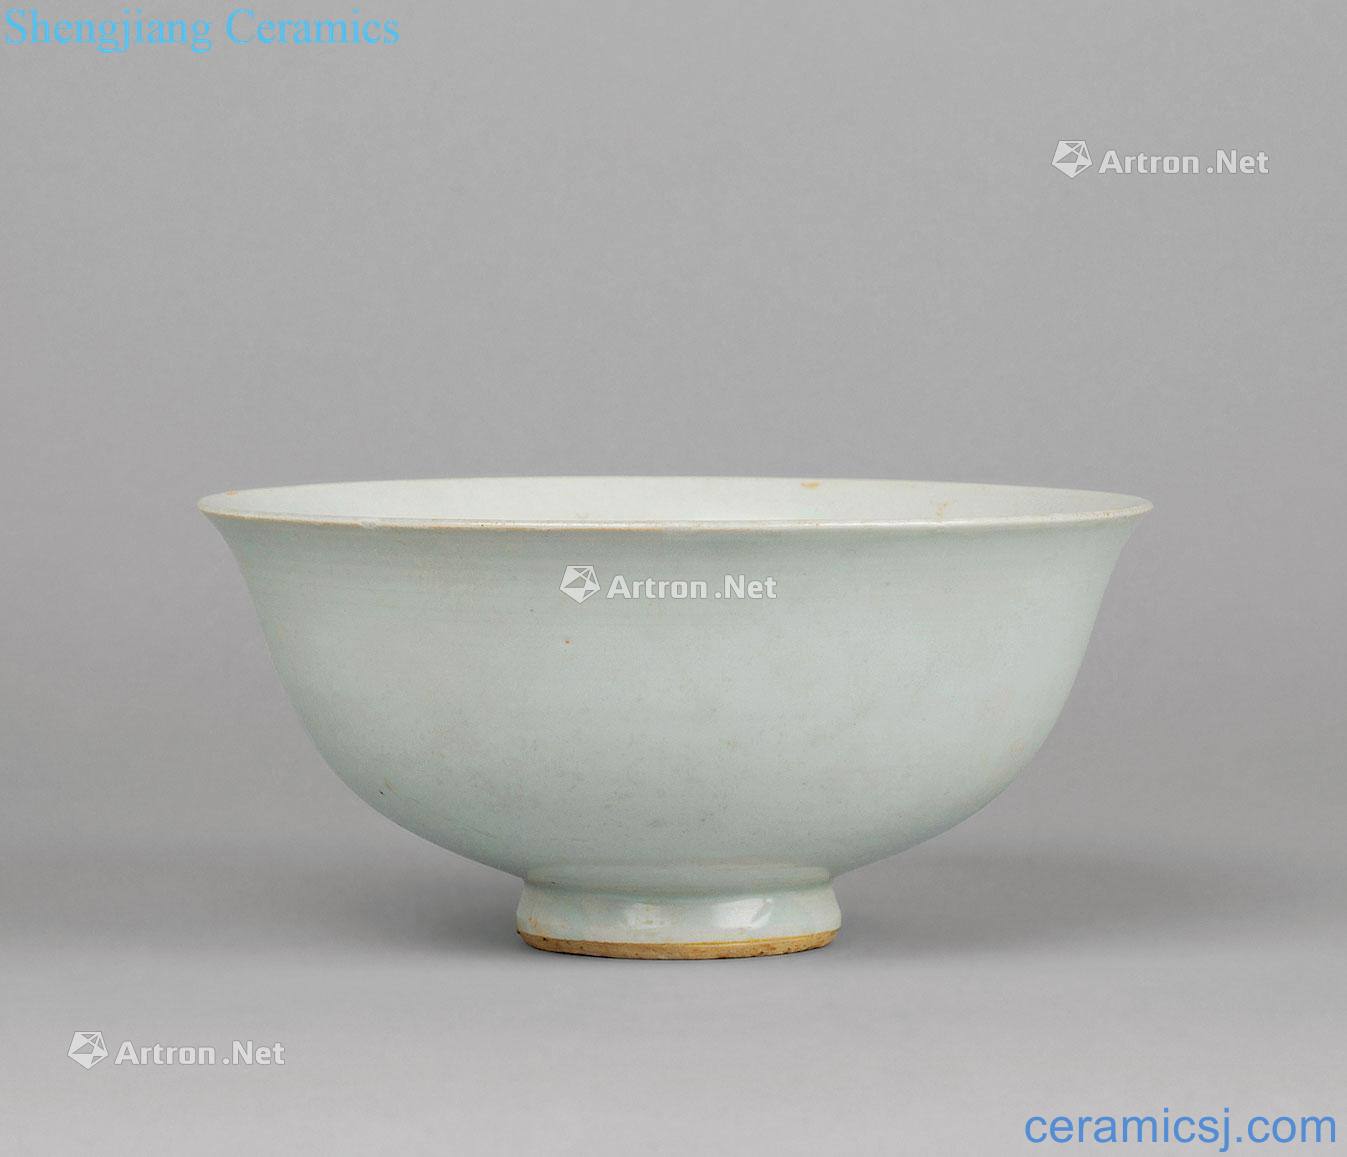 The yuan dynasty Pivot government kiln carved dragon bowl